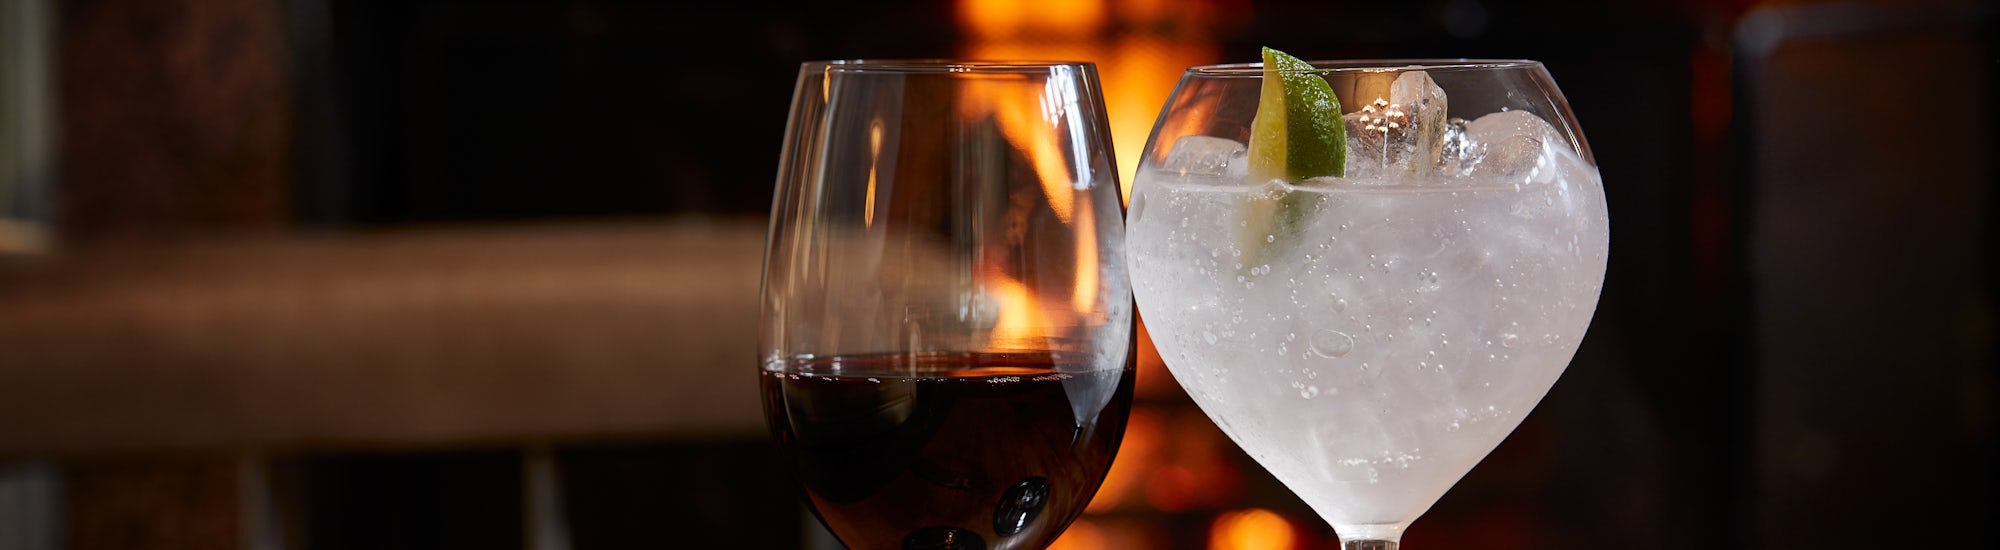 Gin & Wine - Fireplace